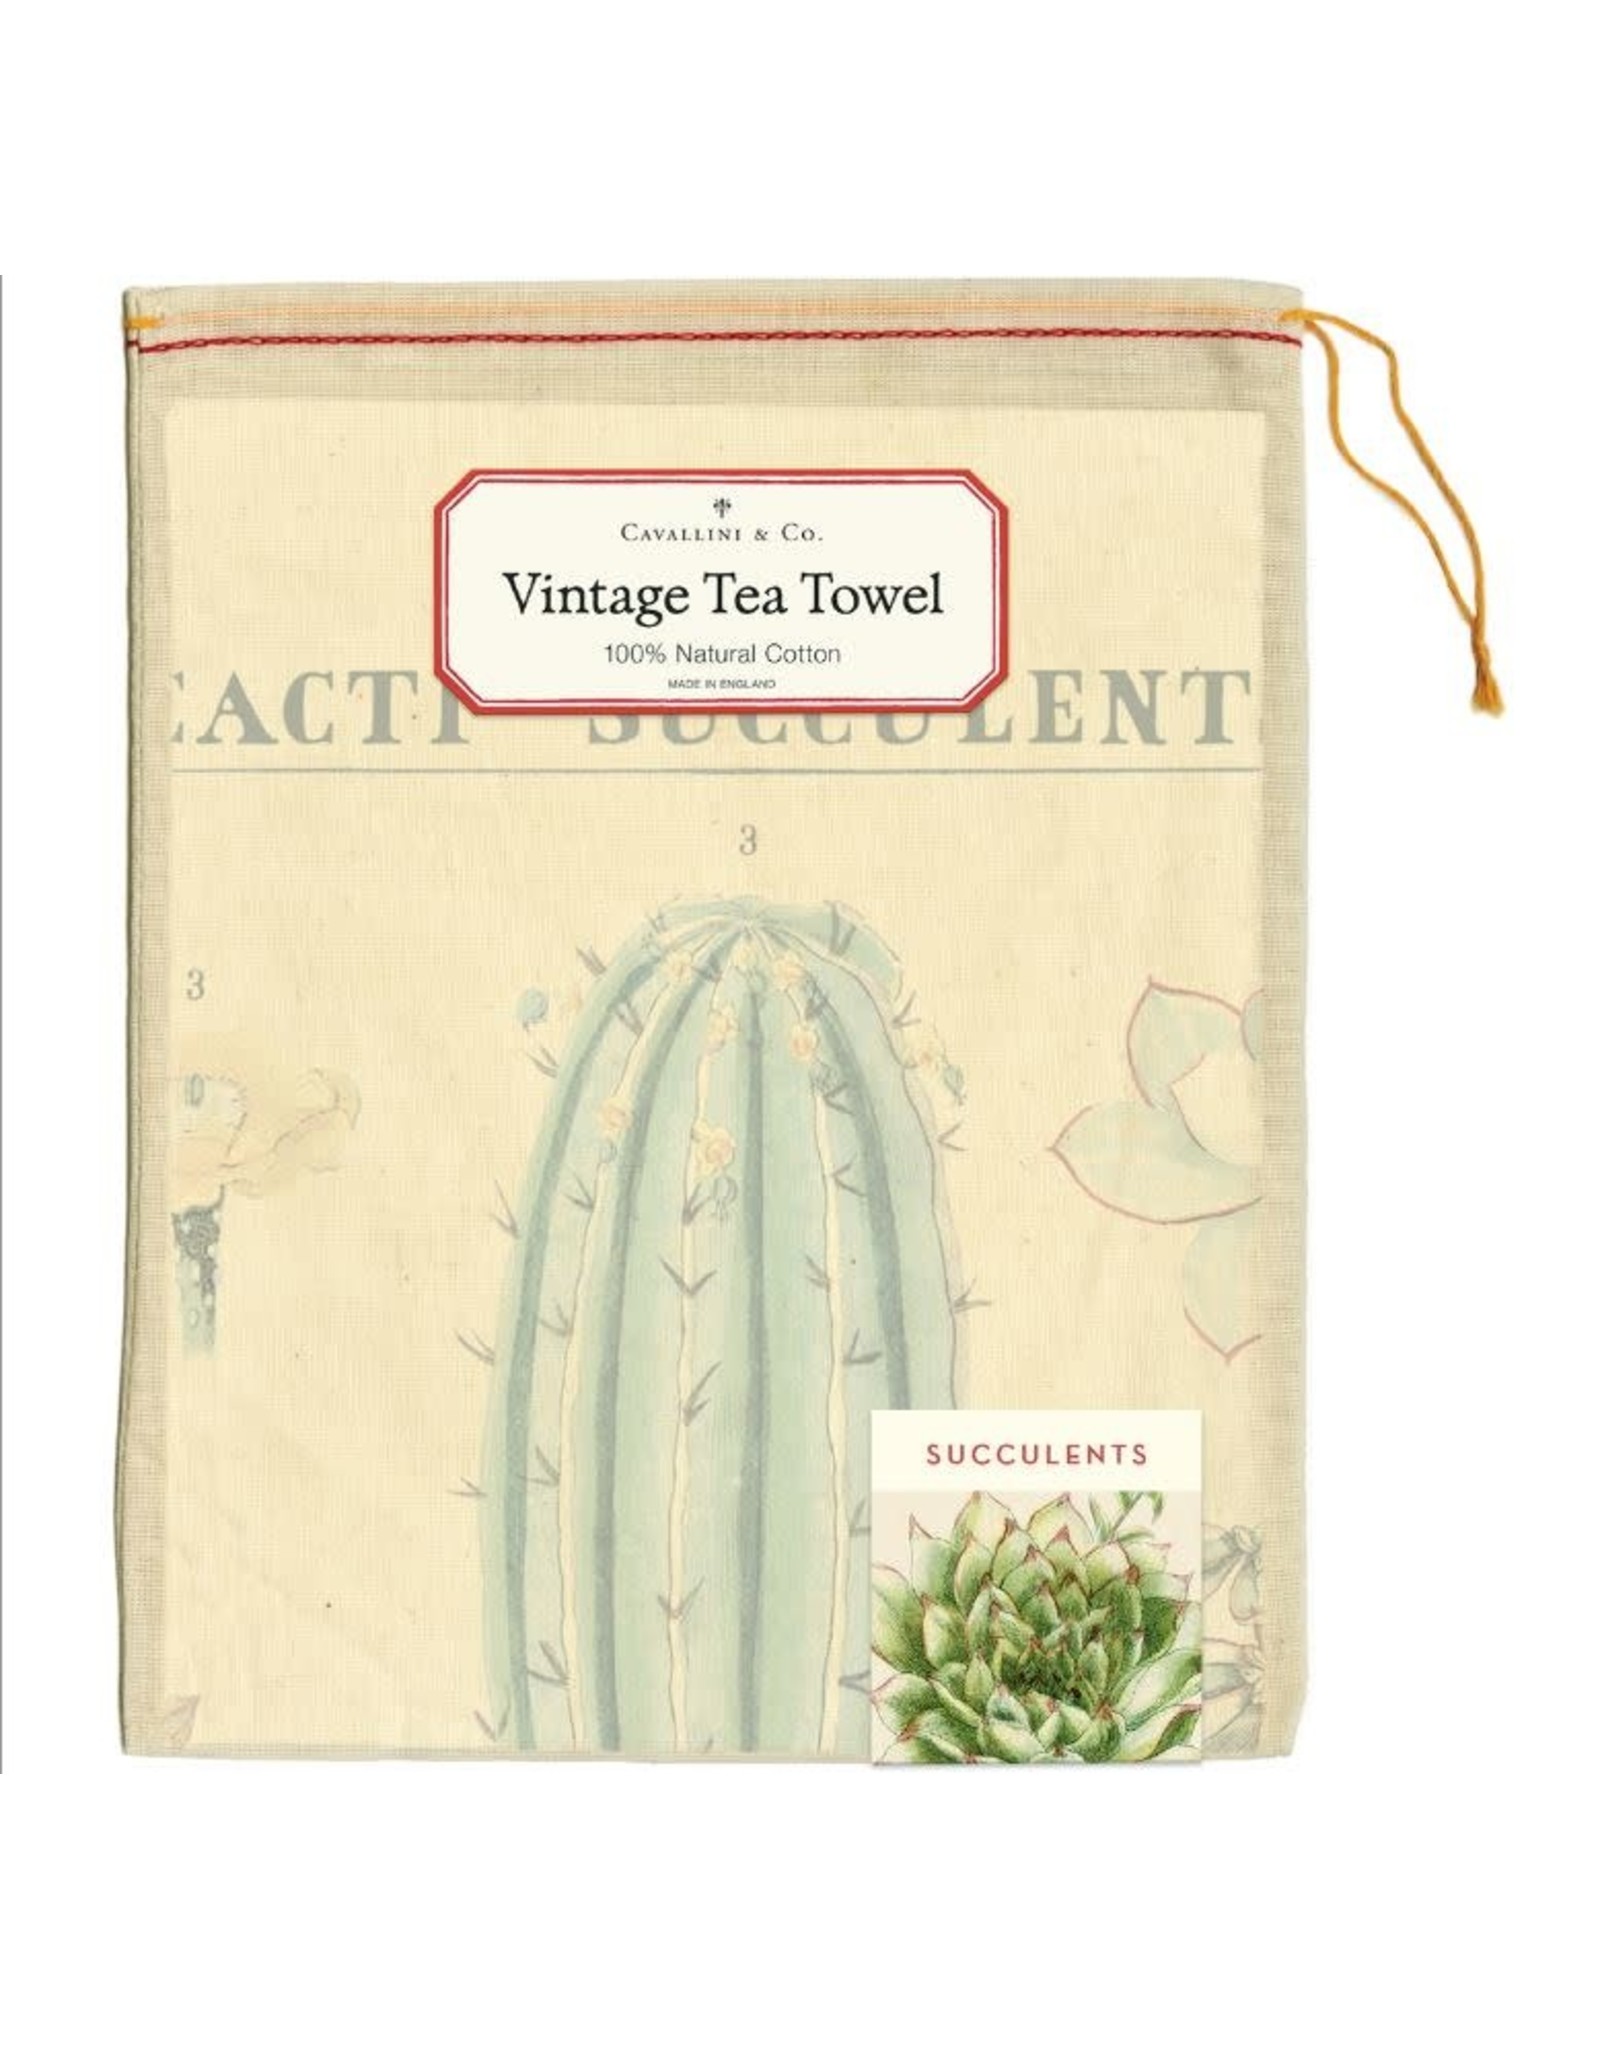 Cavallini Papers & Co. Succulents Tea Towel